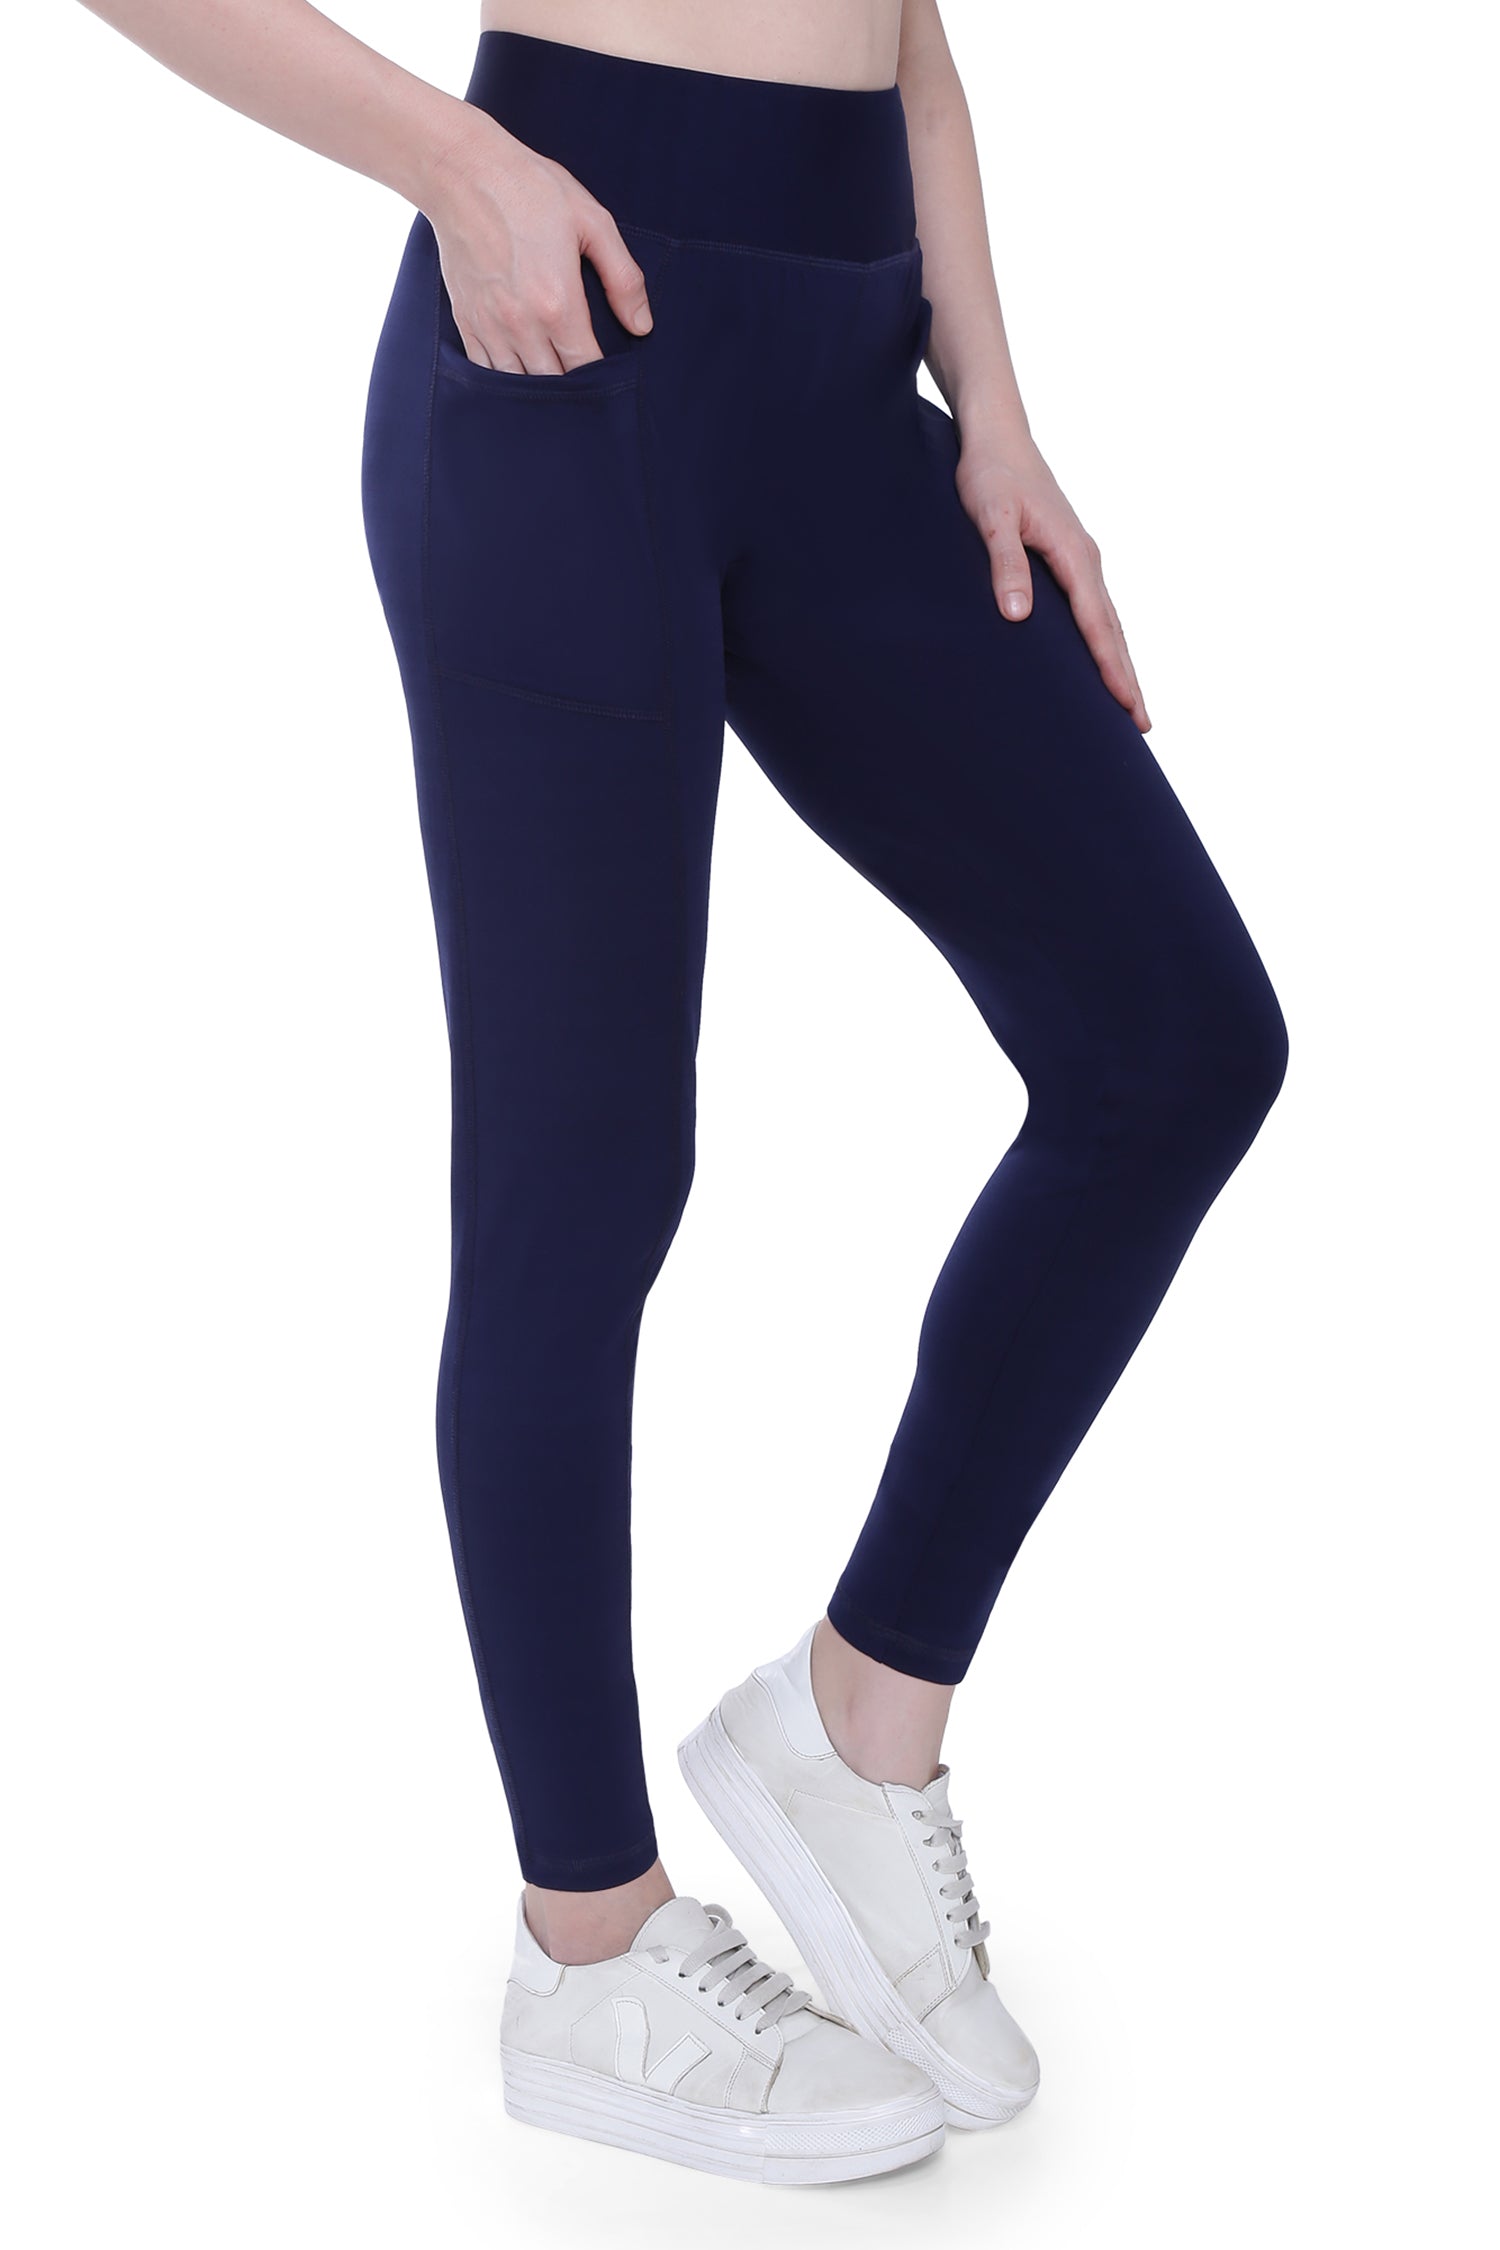 High Waist Scrunch Tiktok Yoga Pants For Women Slim Fit Booty Leggings For  Fitness, Jogging, And Training H1221 From Mengyang10, $12.8 | DHgate.Com